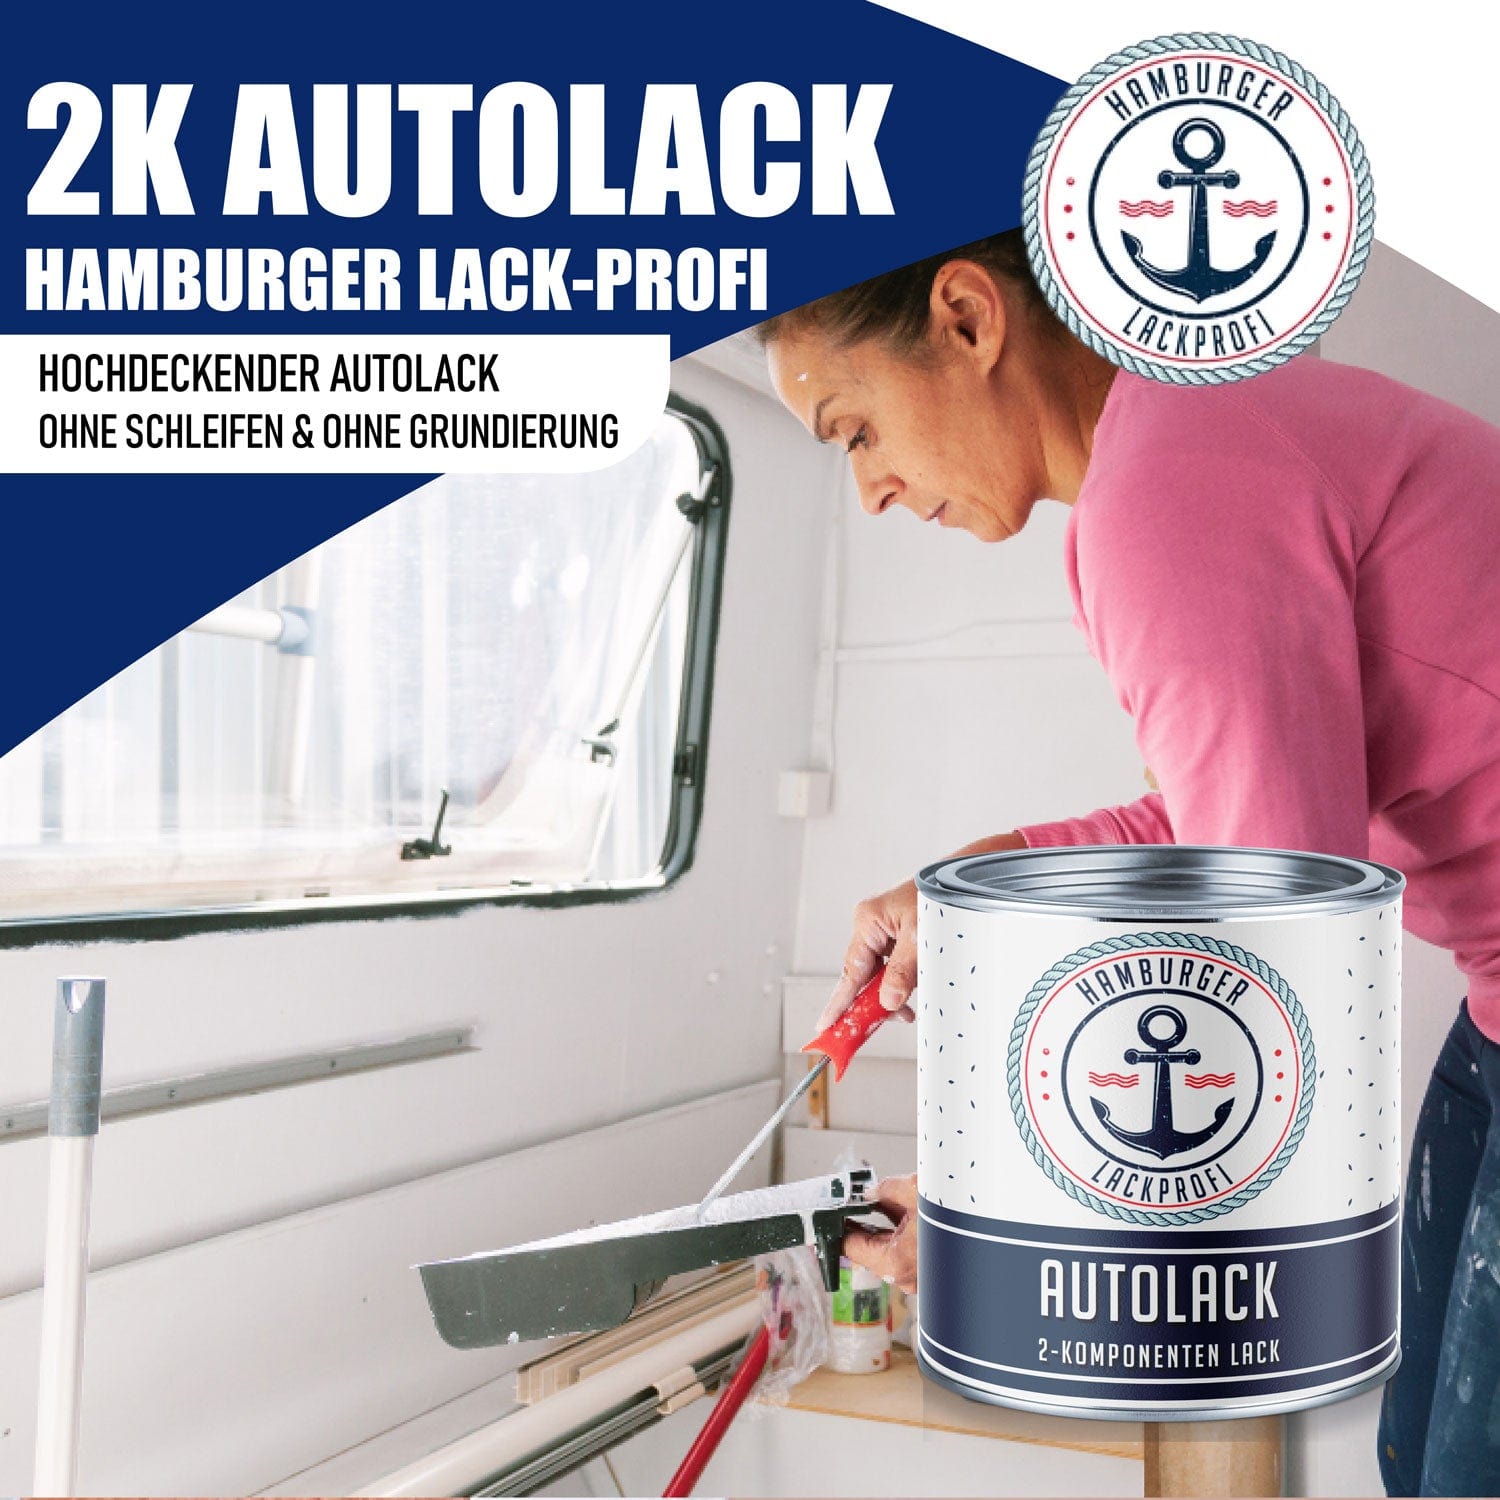 Hamburger Lack-Profi Lacke & Beschichtungen Hamburger Lack-Profi 2K Autolack in Resedagrün RAL 6011 mit Lackierset (X300) & Verdünnung (1 L) - 30% Sparangebot